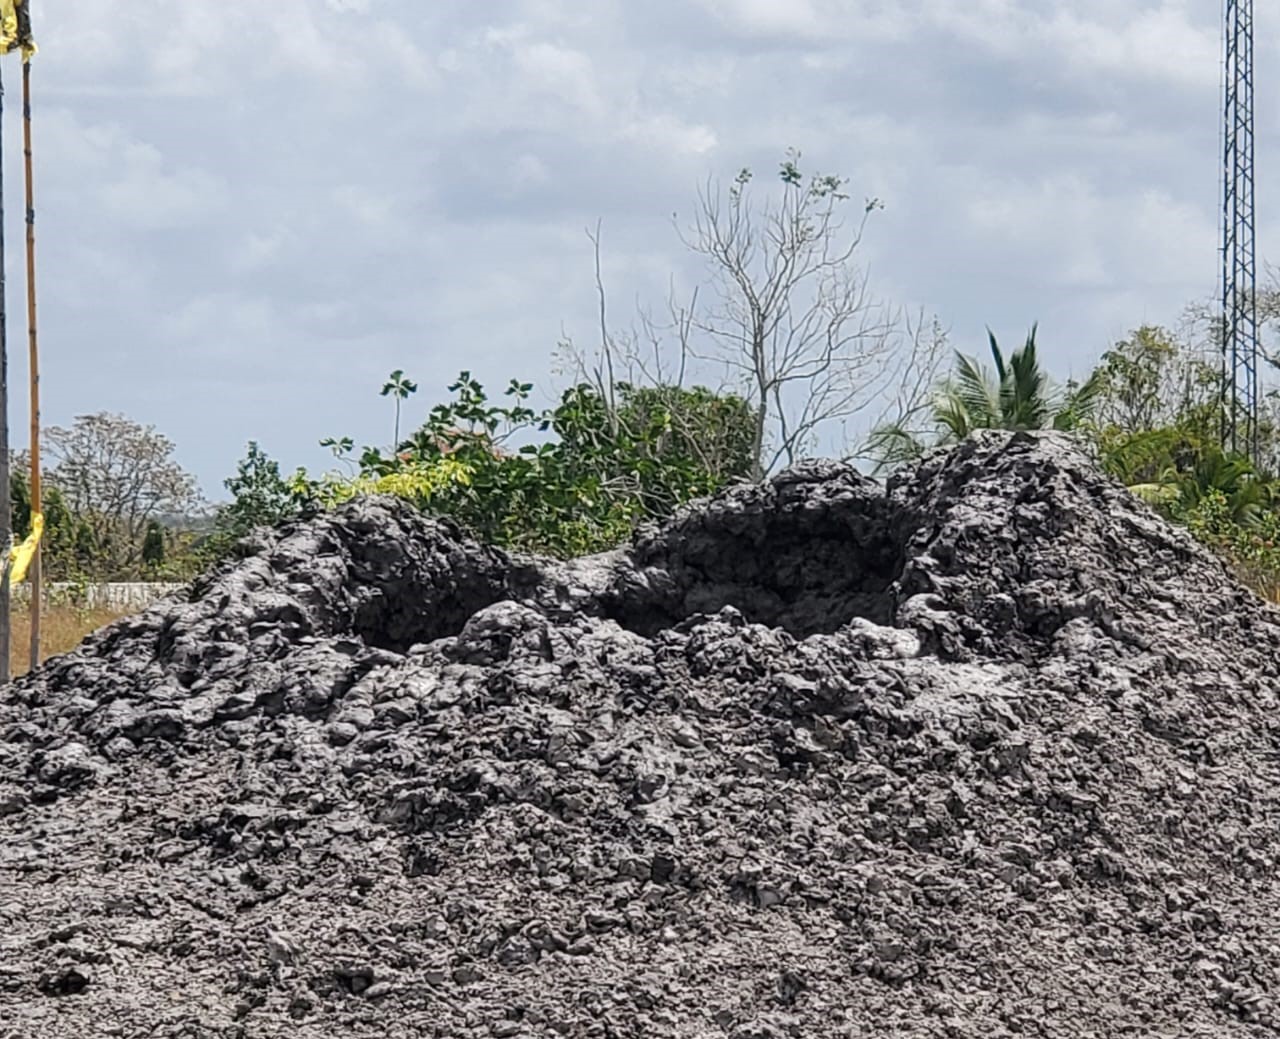 Piparo mud volcano eruptions less frequent